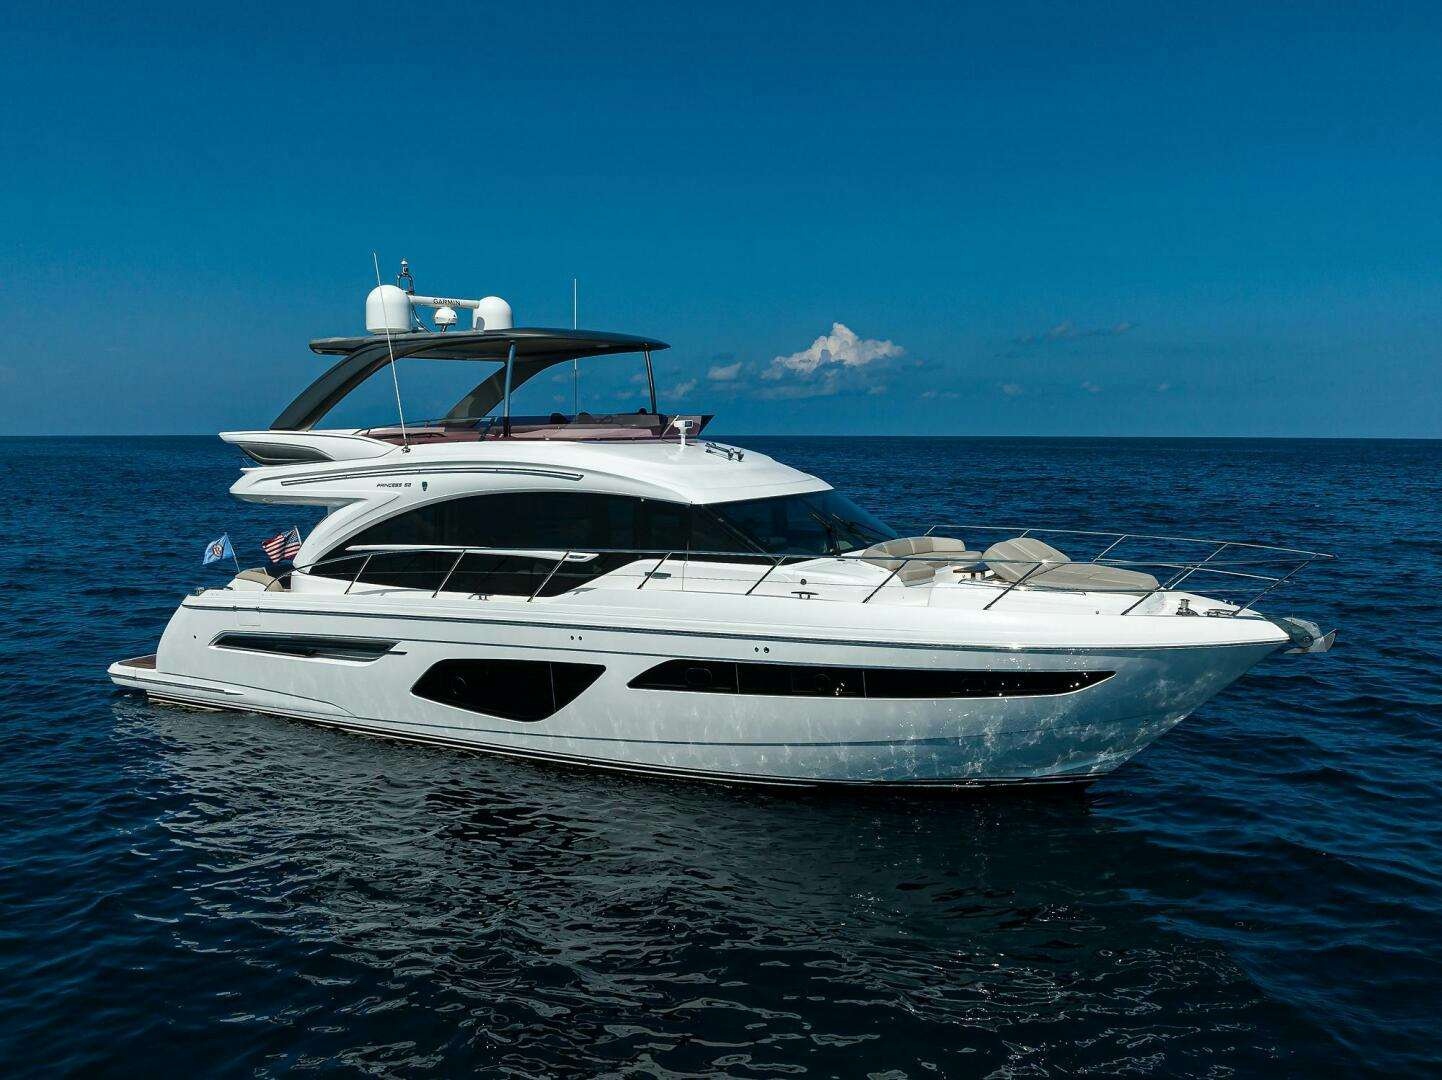 62' princess f62 2020
Yacht for Sale